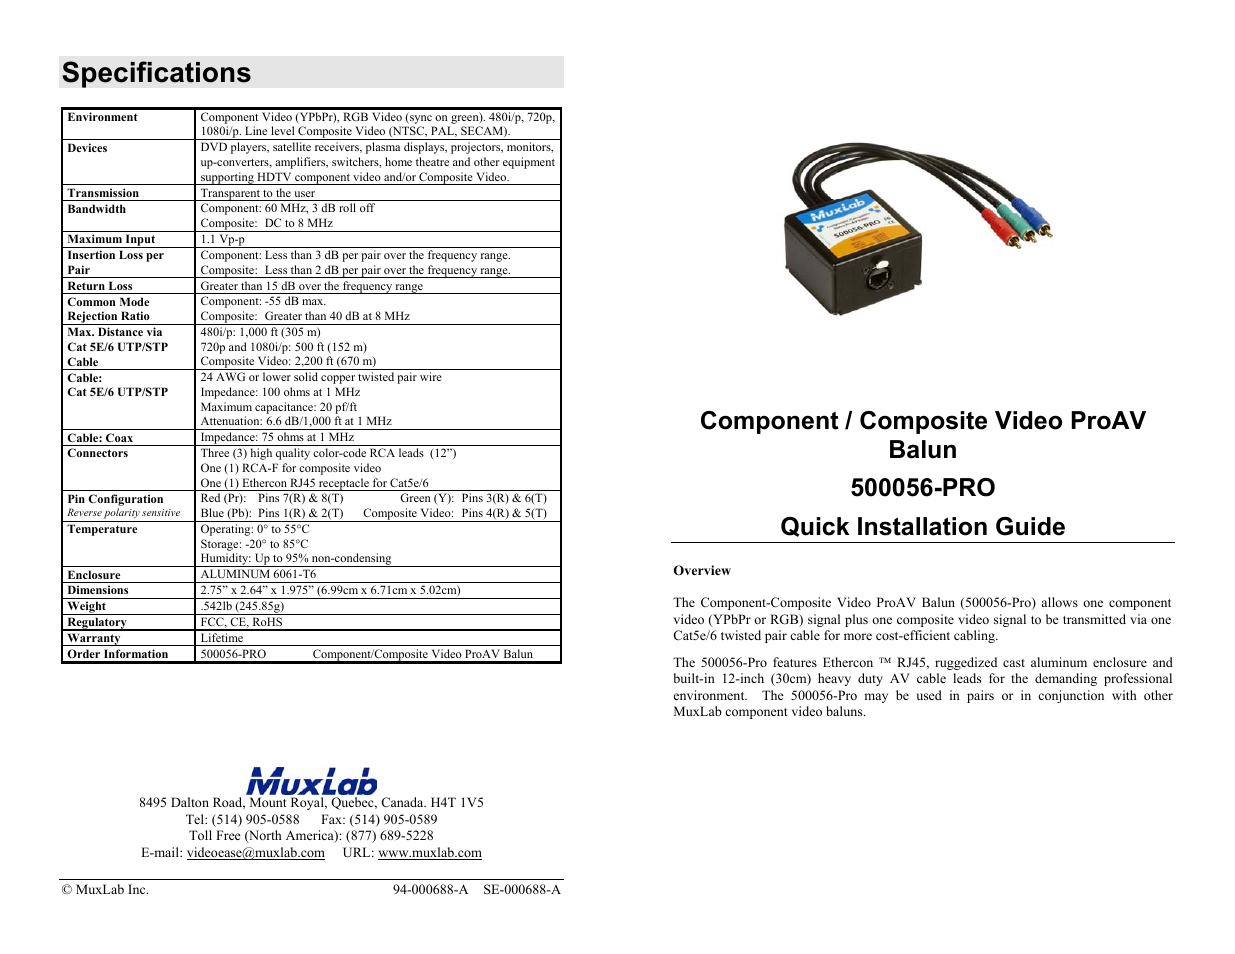 Component-Composite Video ProAV Balun